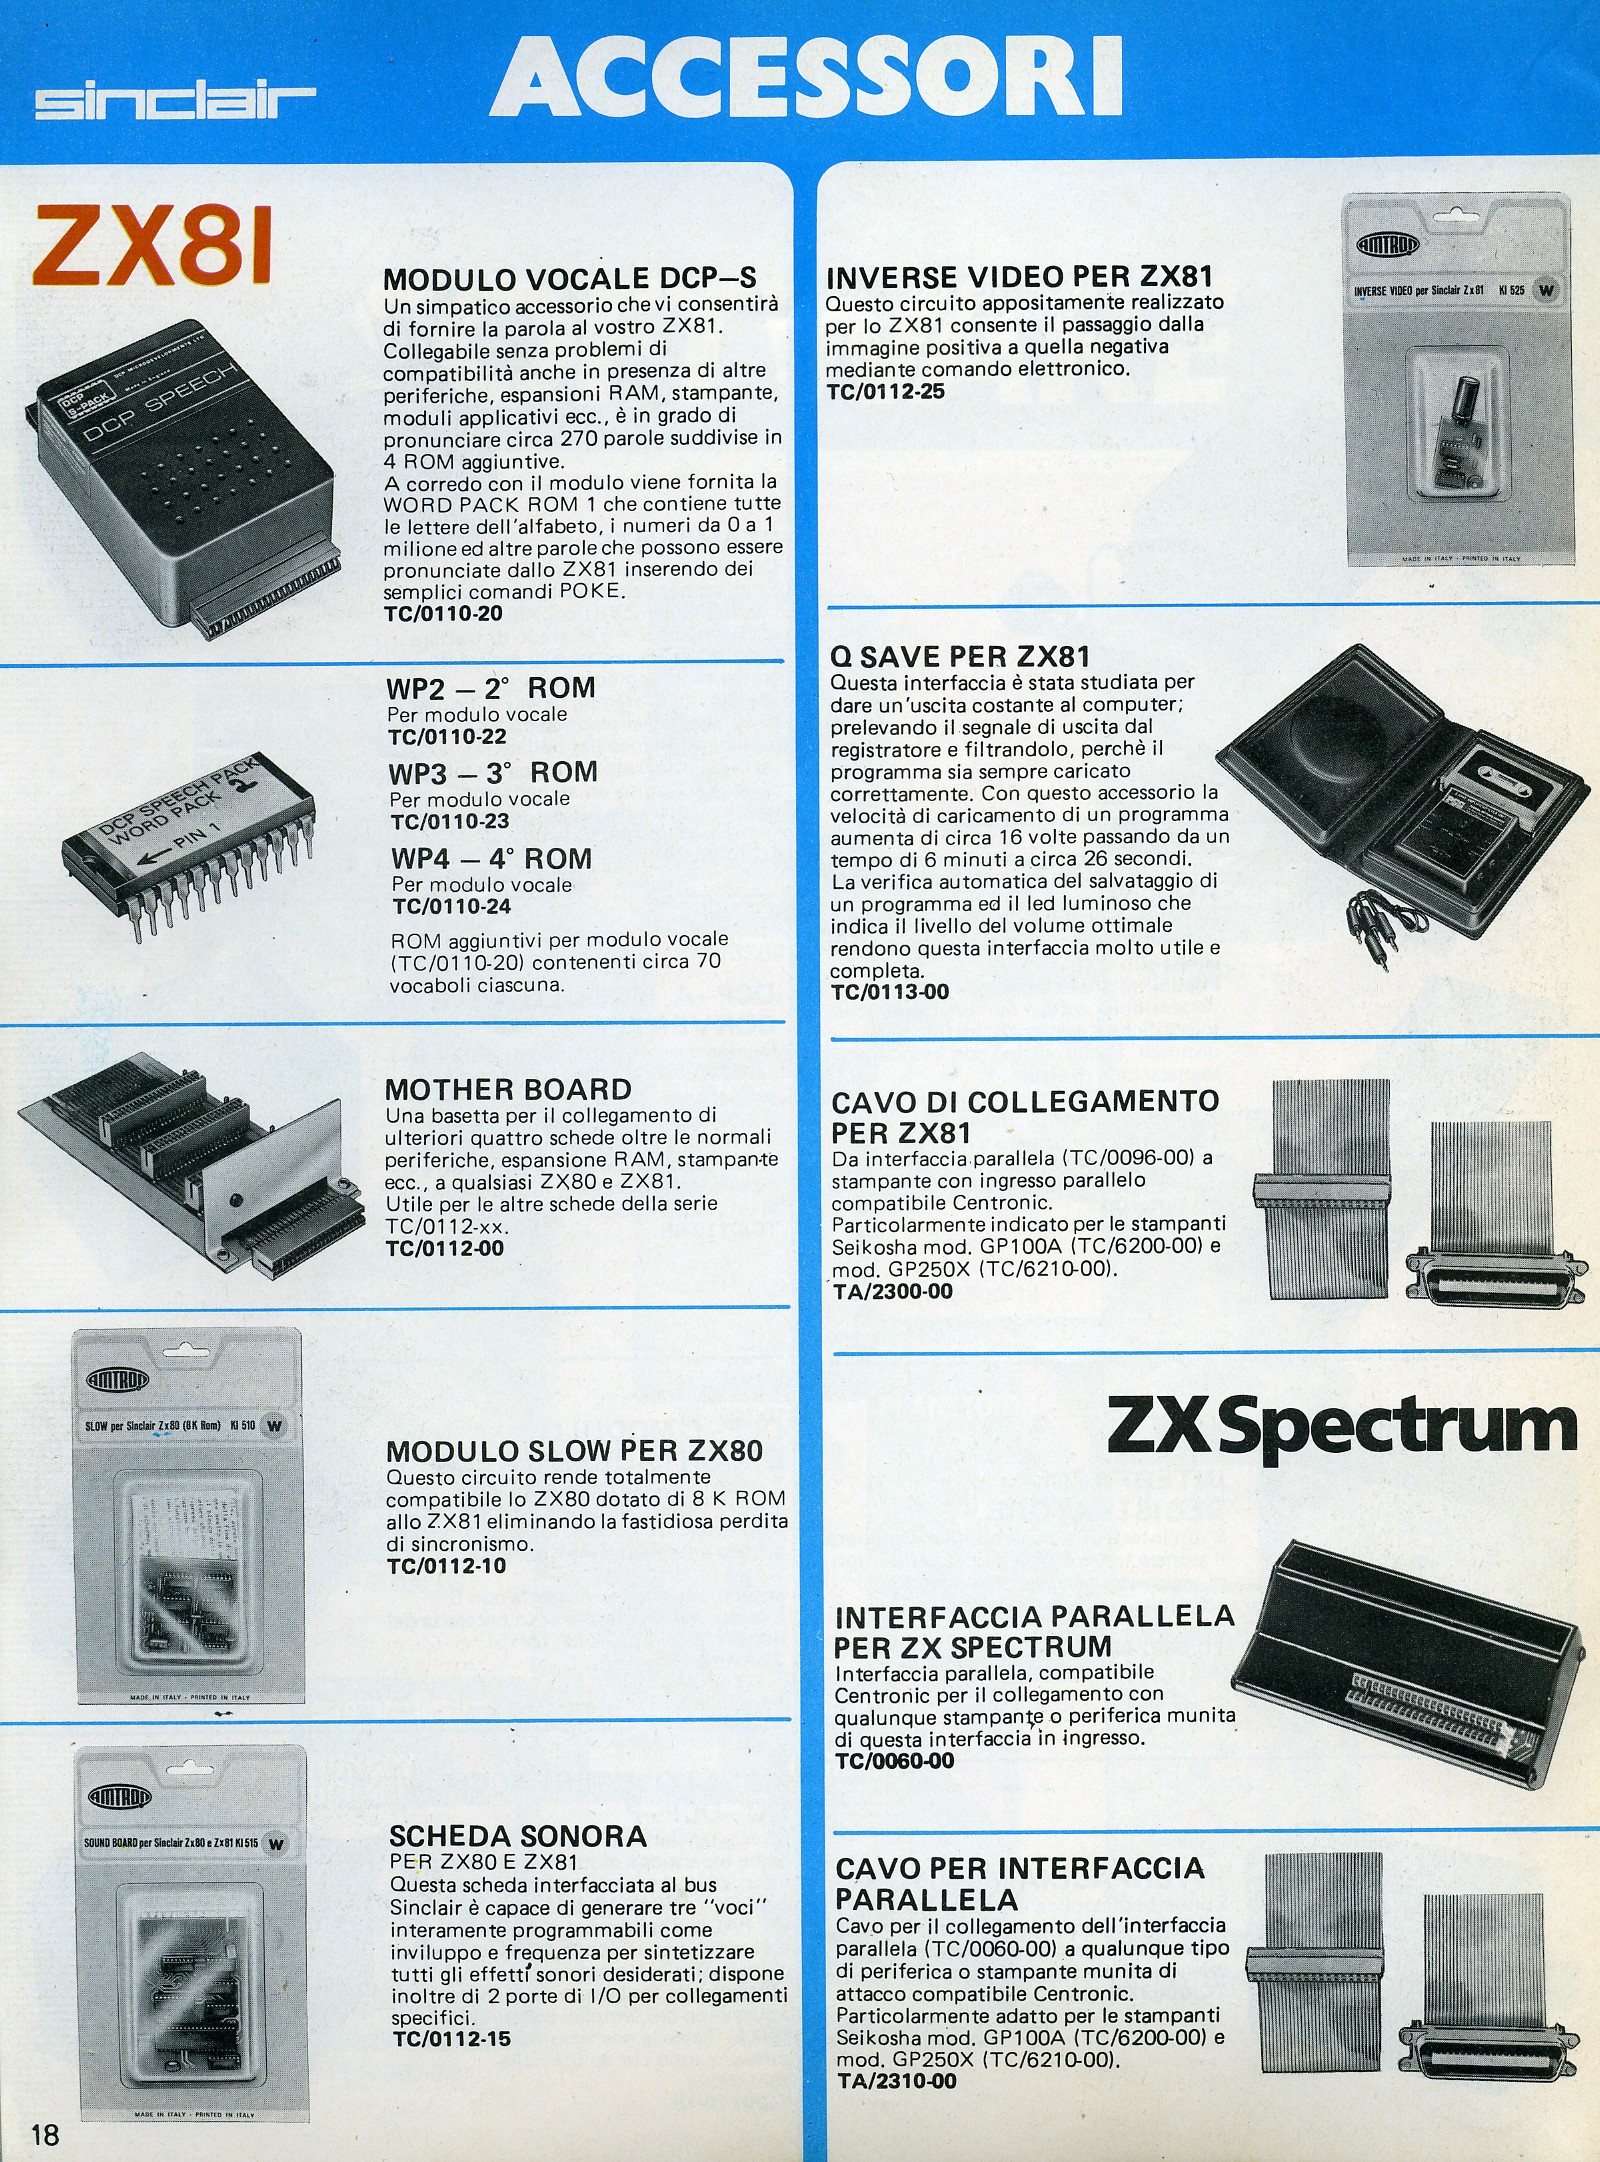 ZX 81 (ZX81)